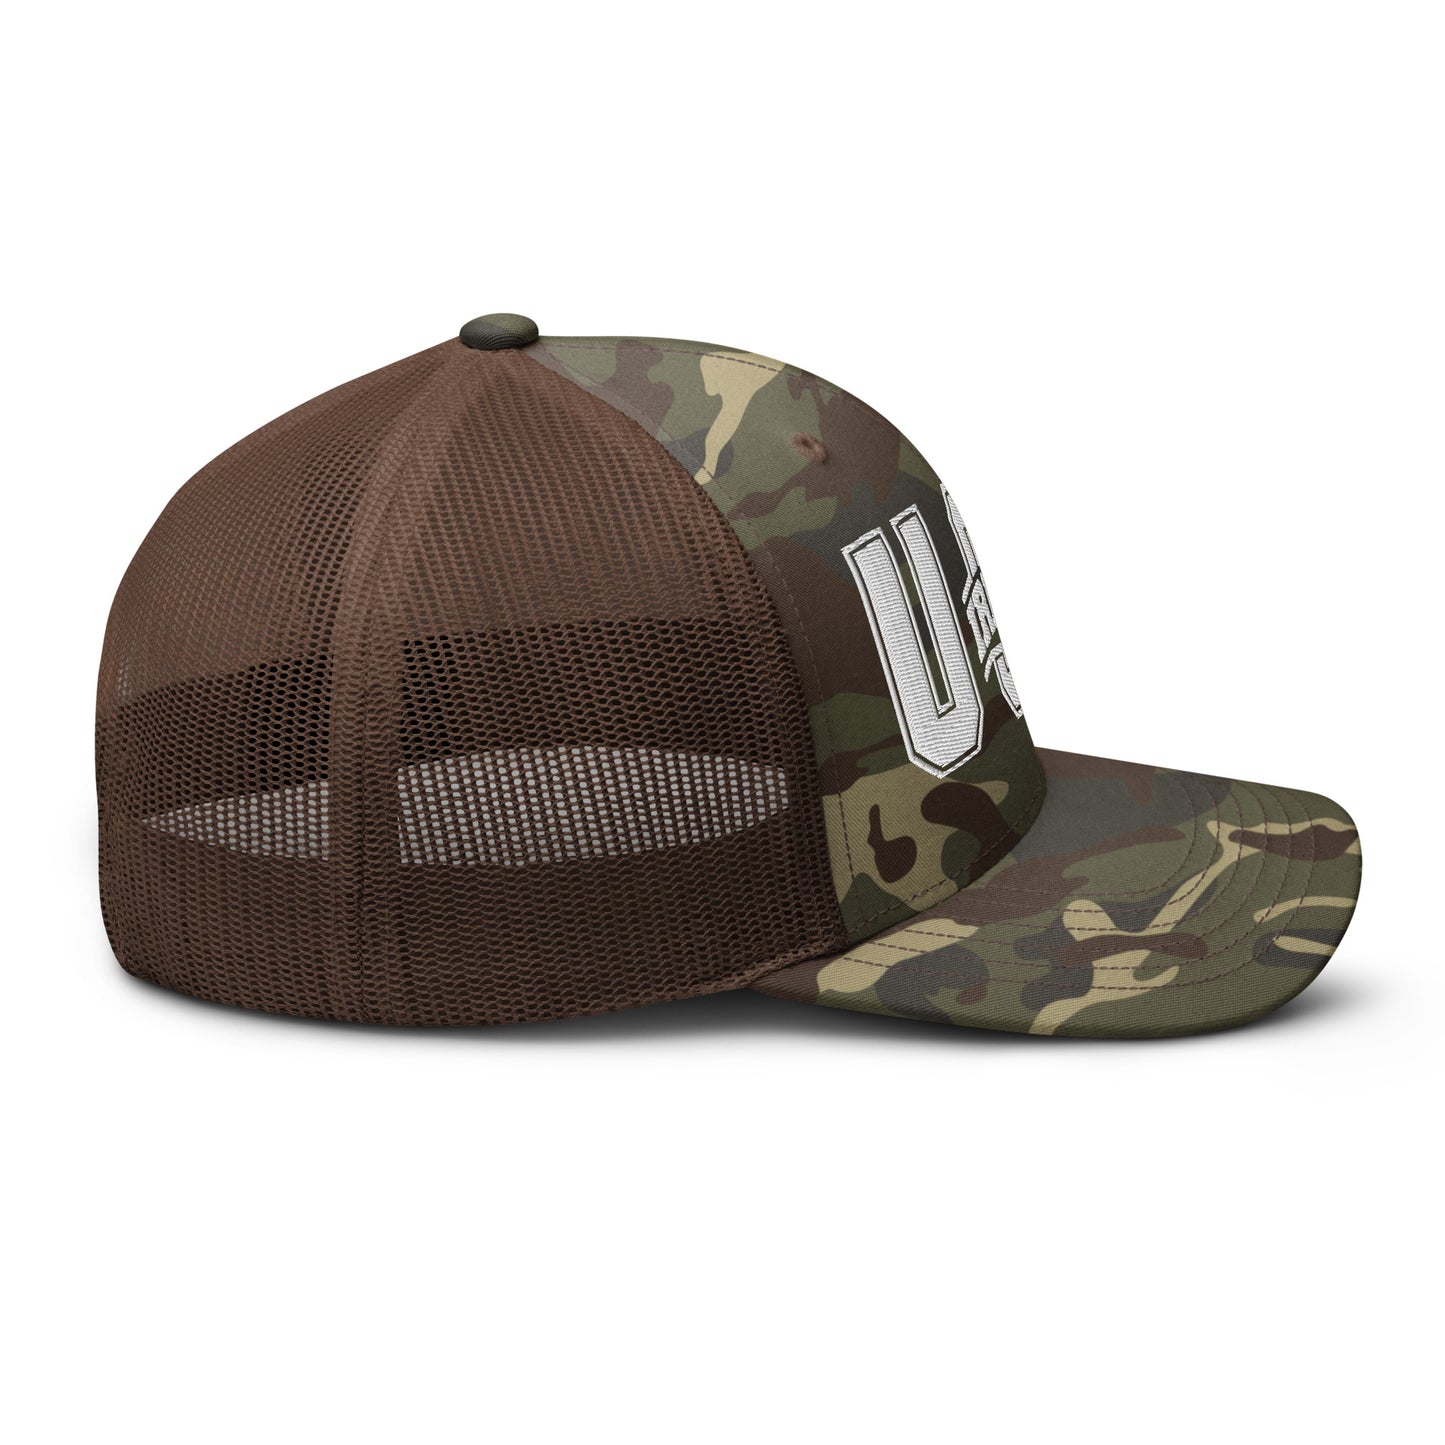 USA-SCIOTO LOGO SUBSTITUTION-Camouflage trucker hat